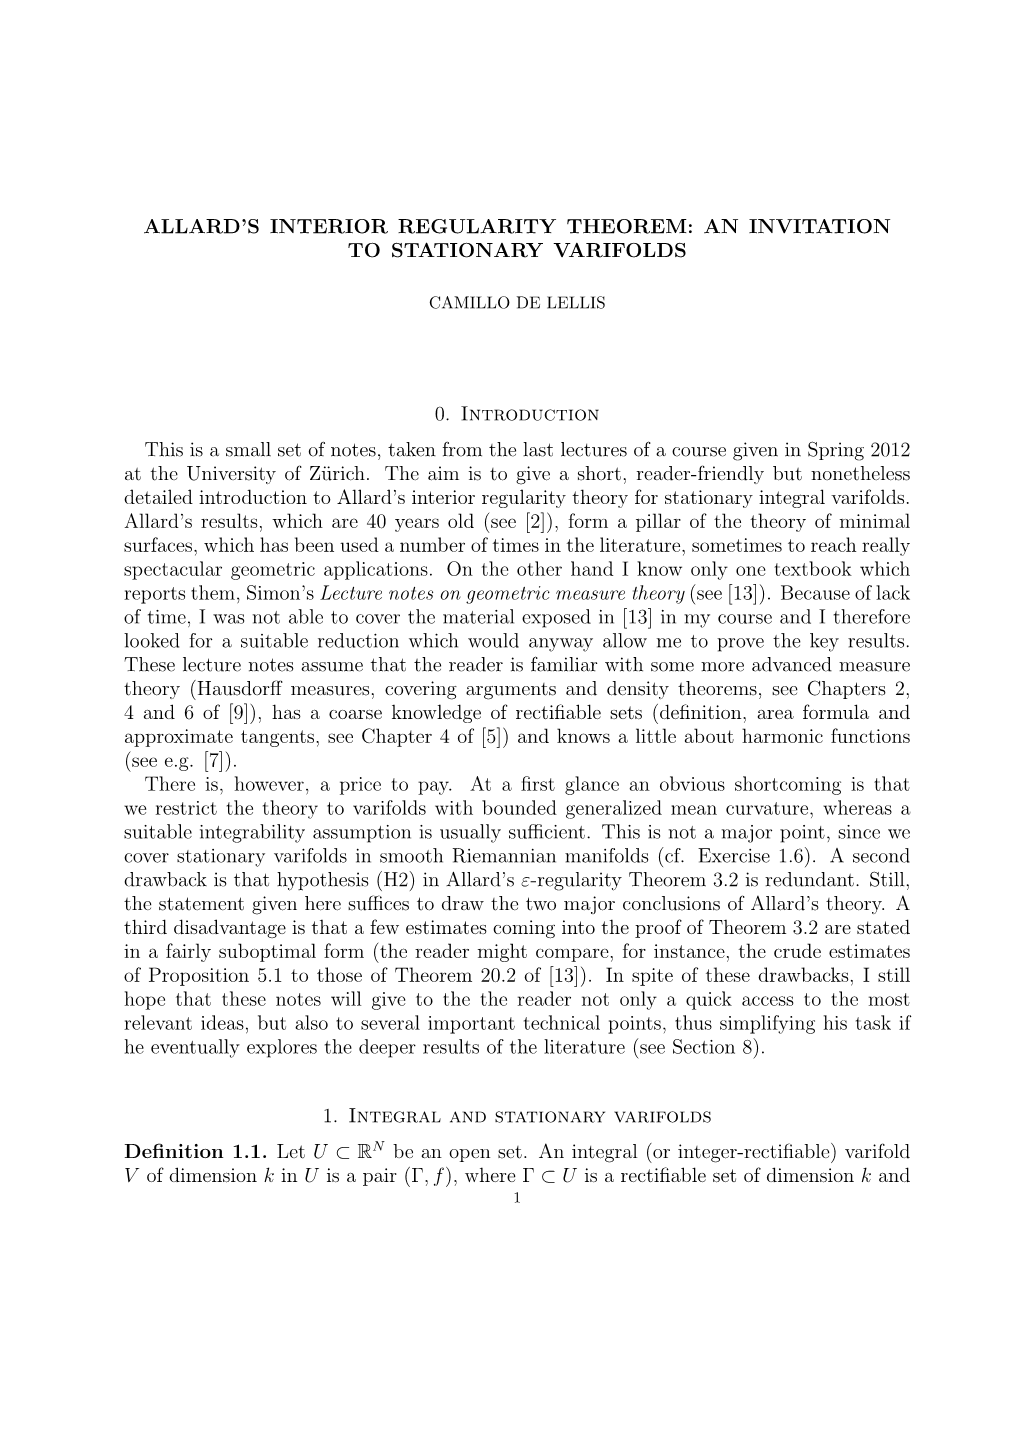 Allard's Interior Regularity Theorem